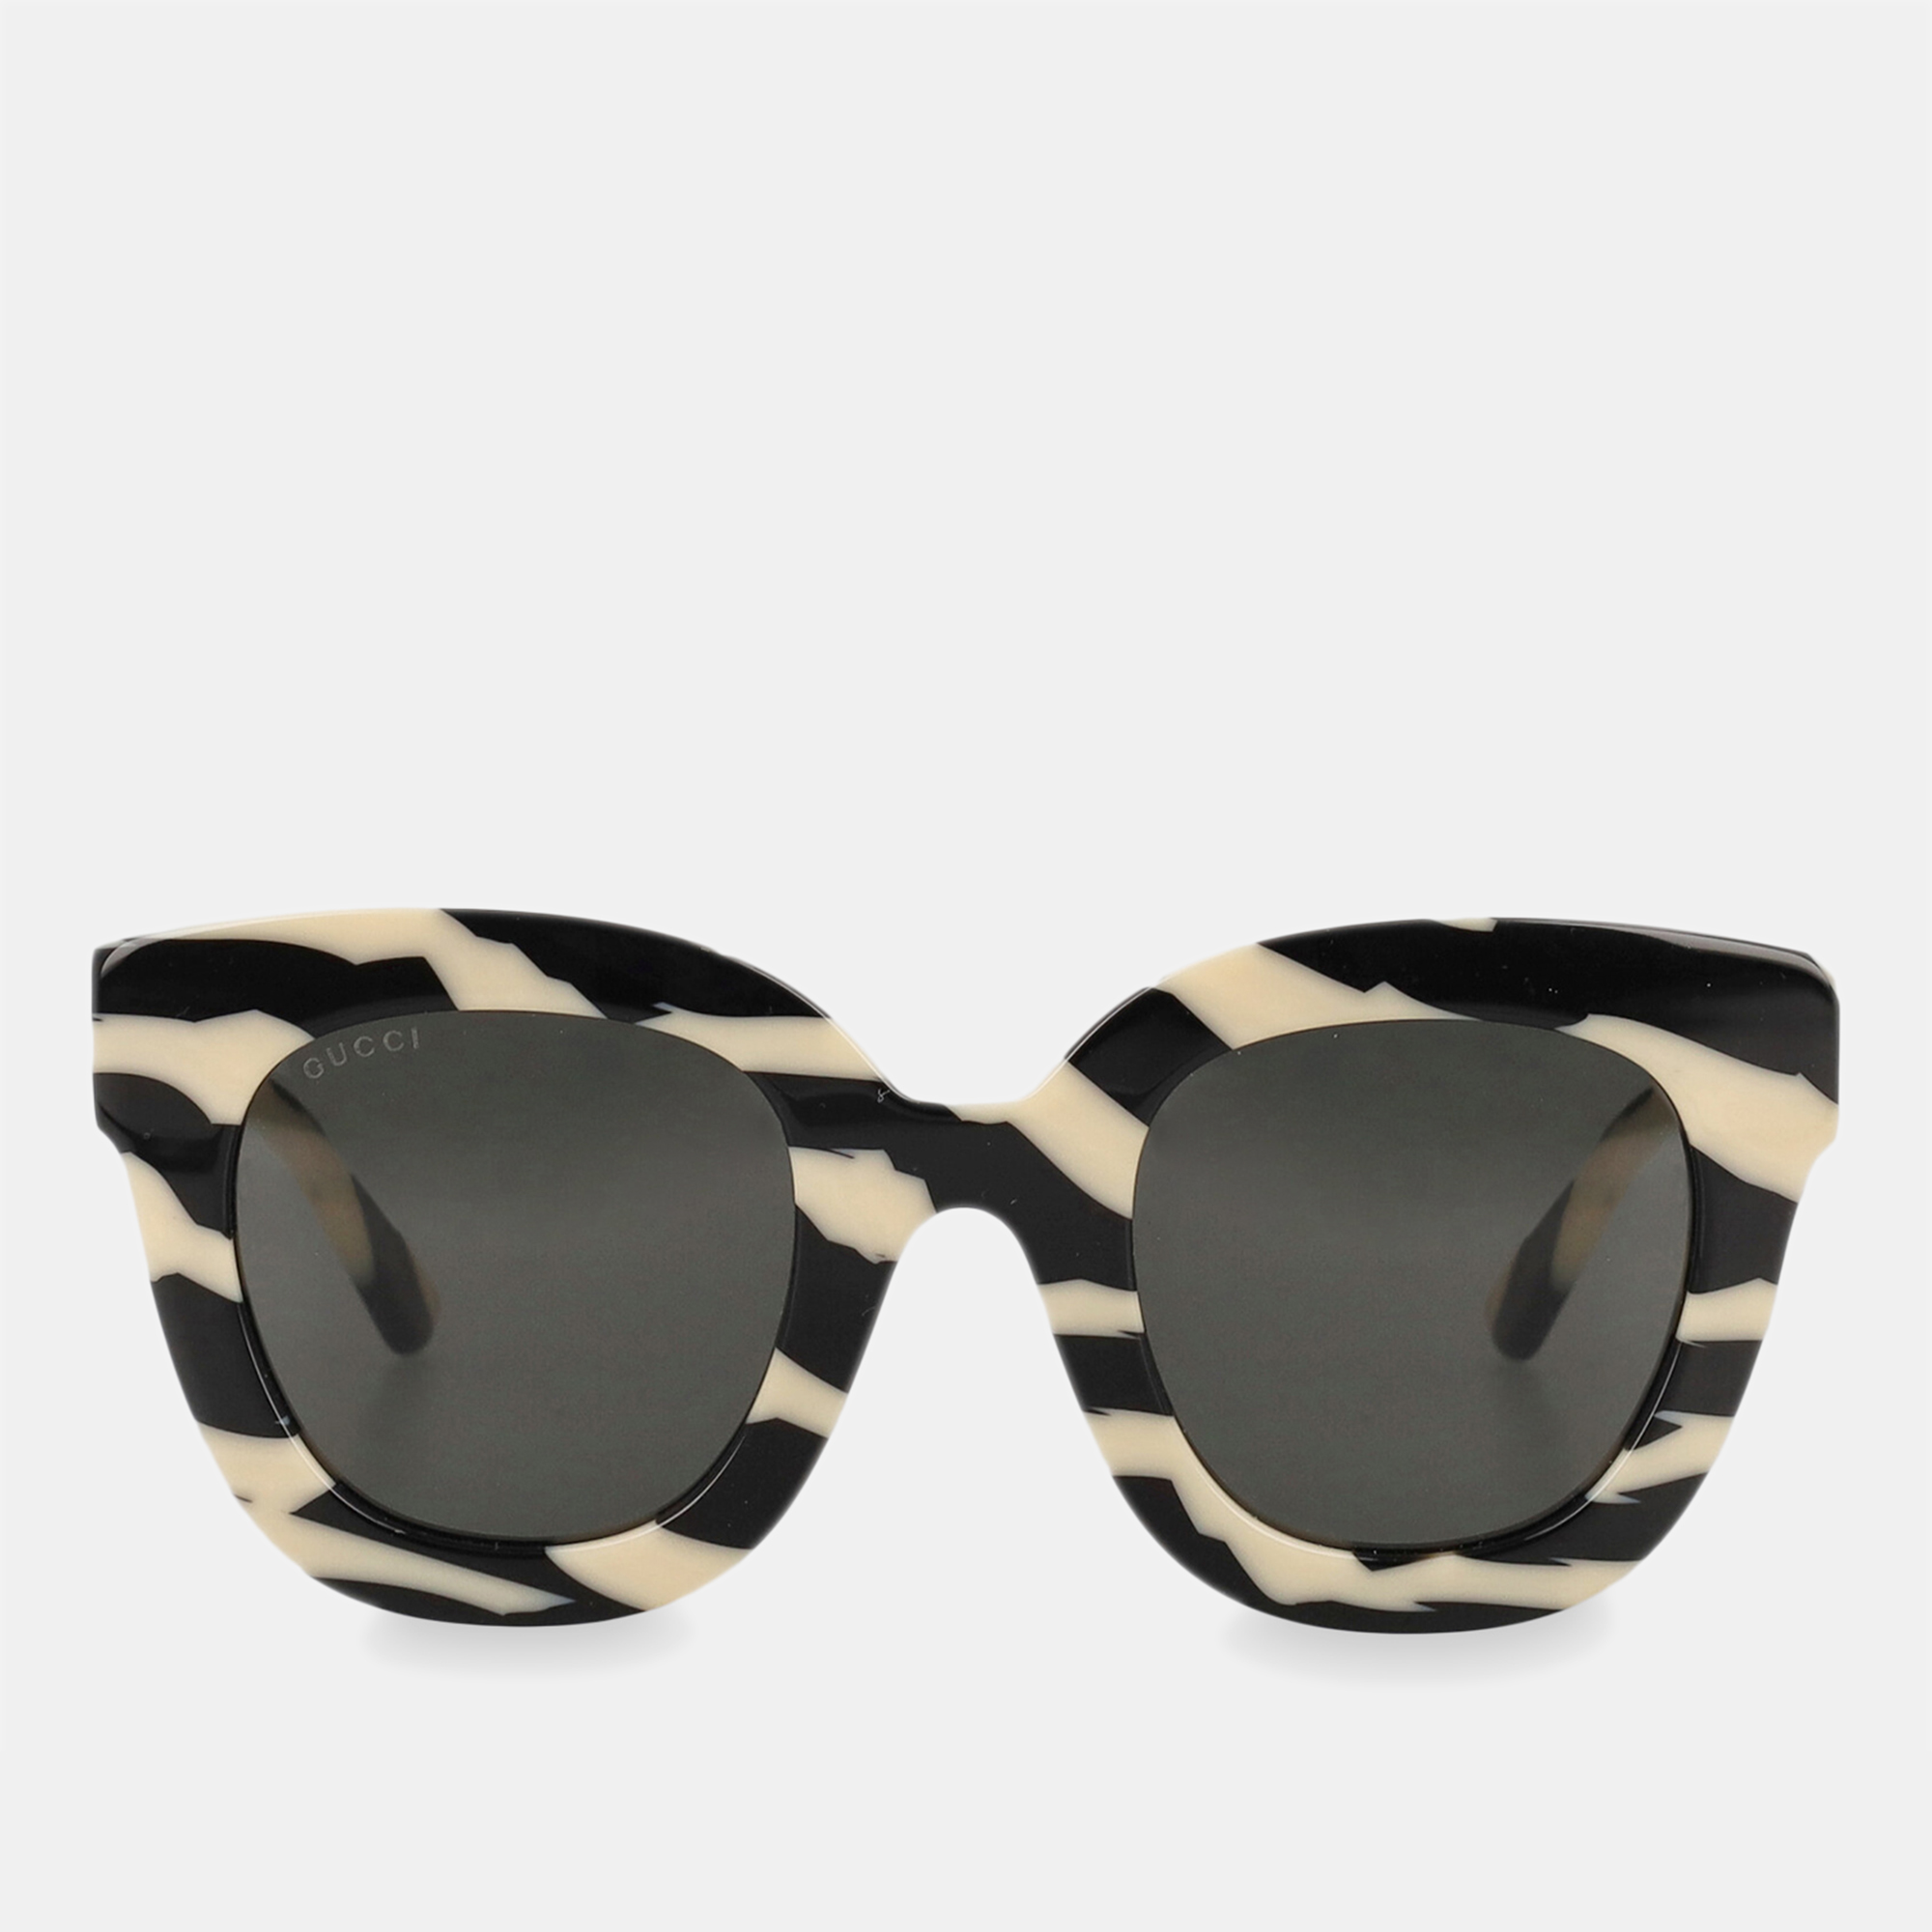 Gucci  Women's Synthetic Fibers Sunglasses - Black - One Size